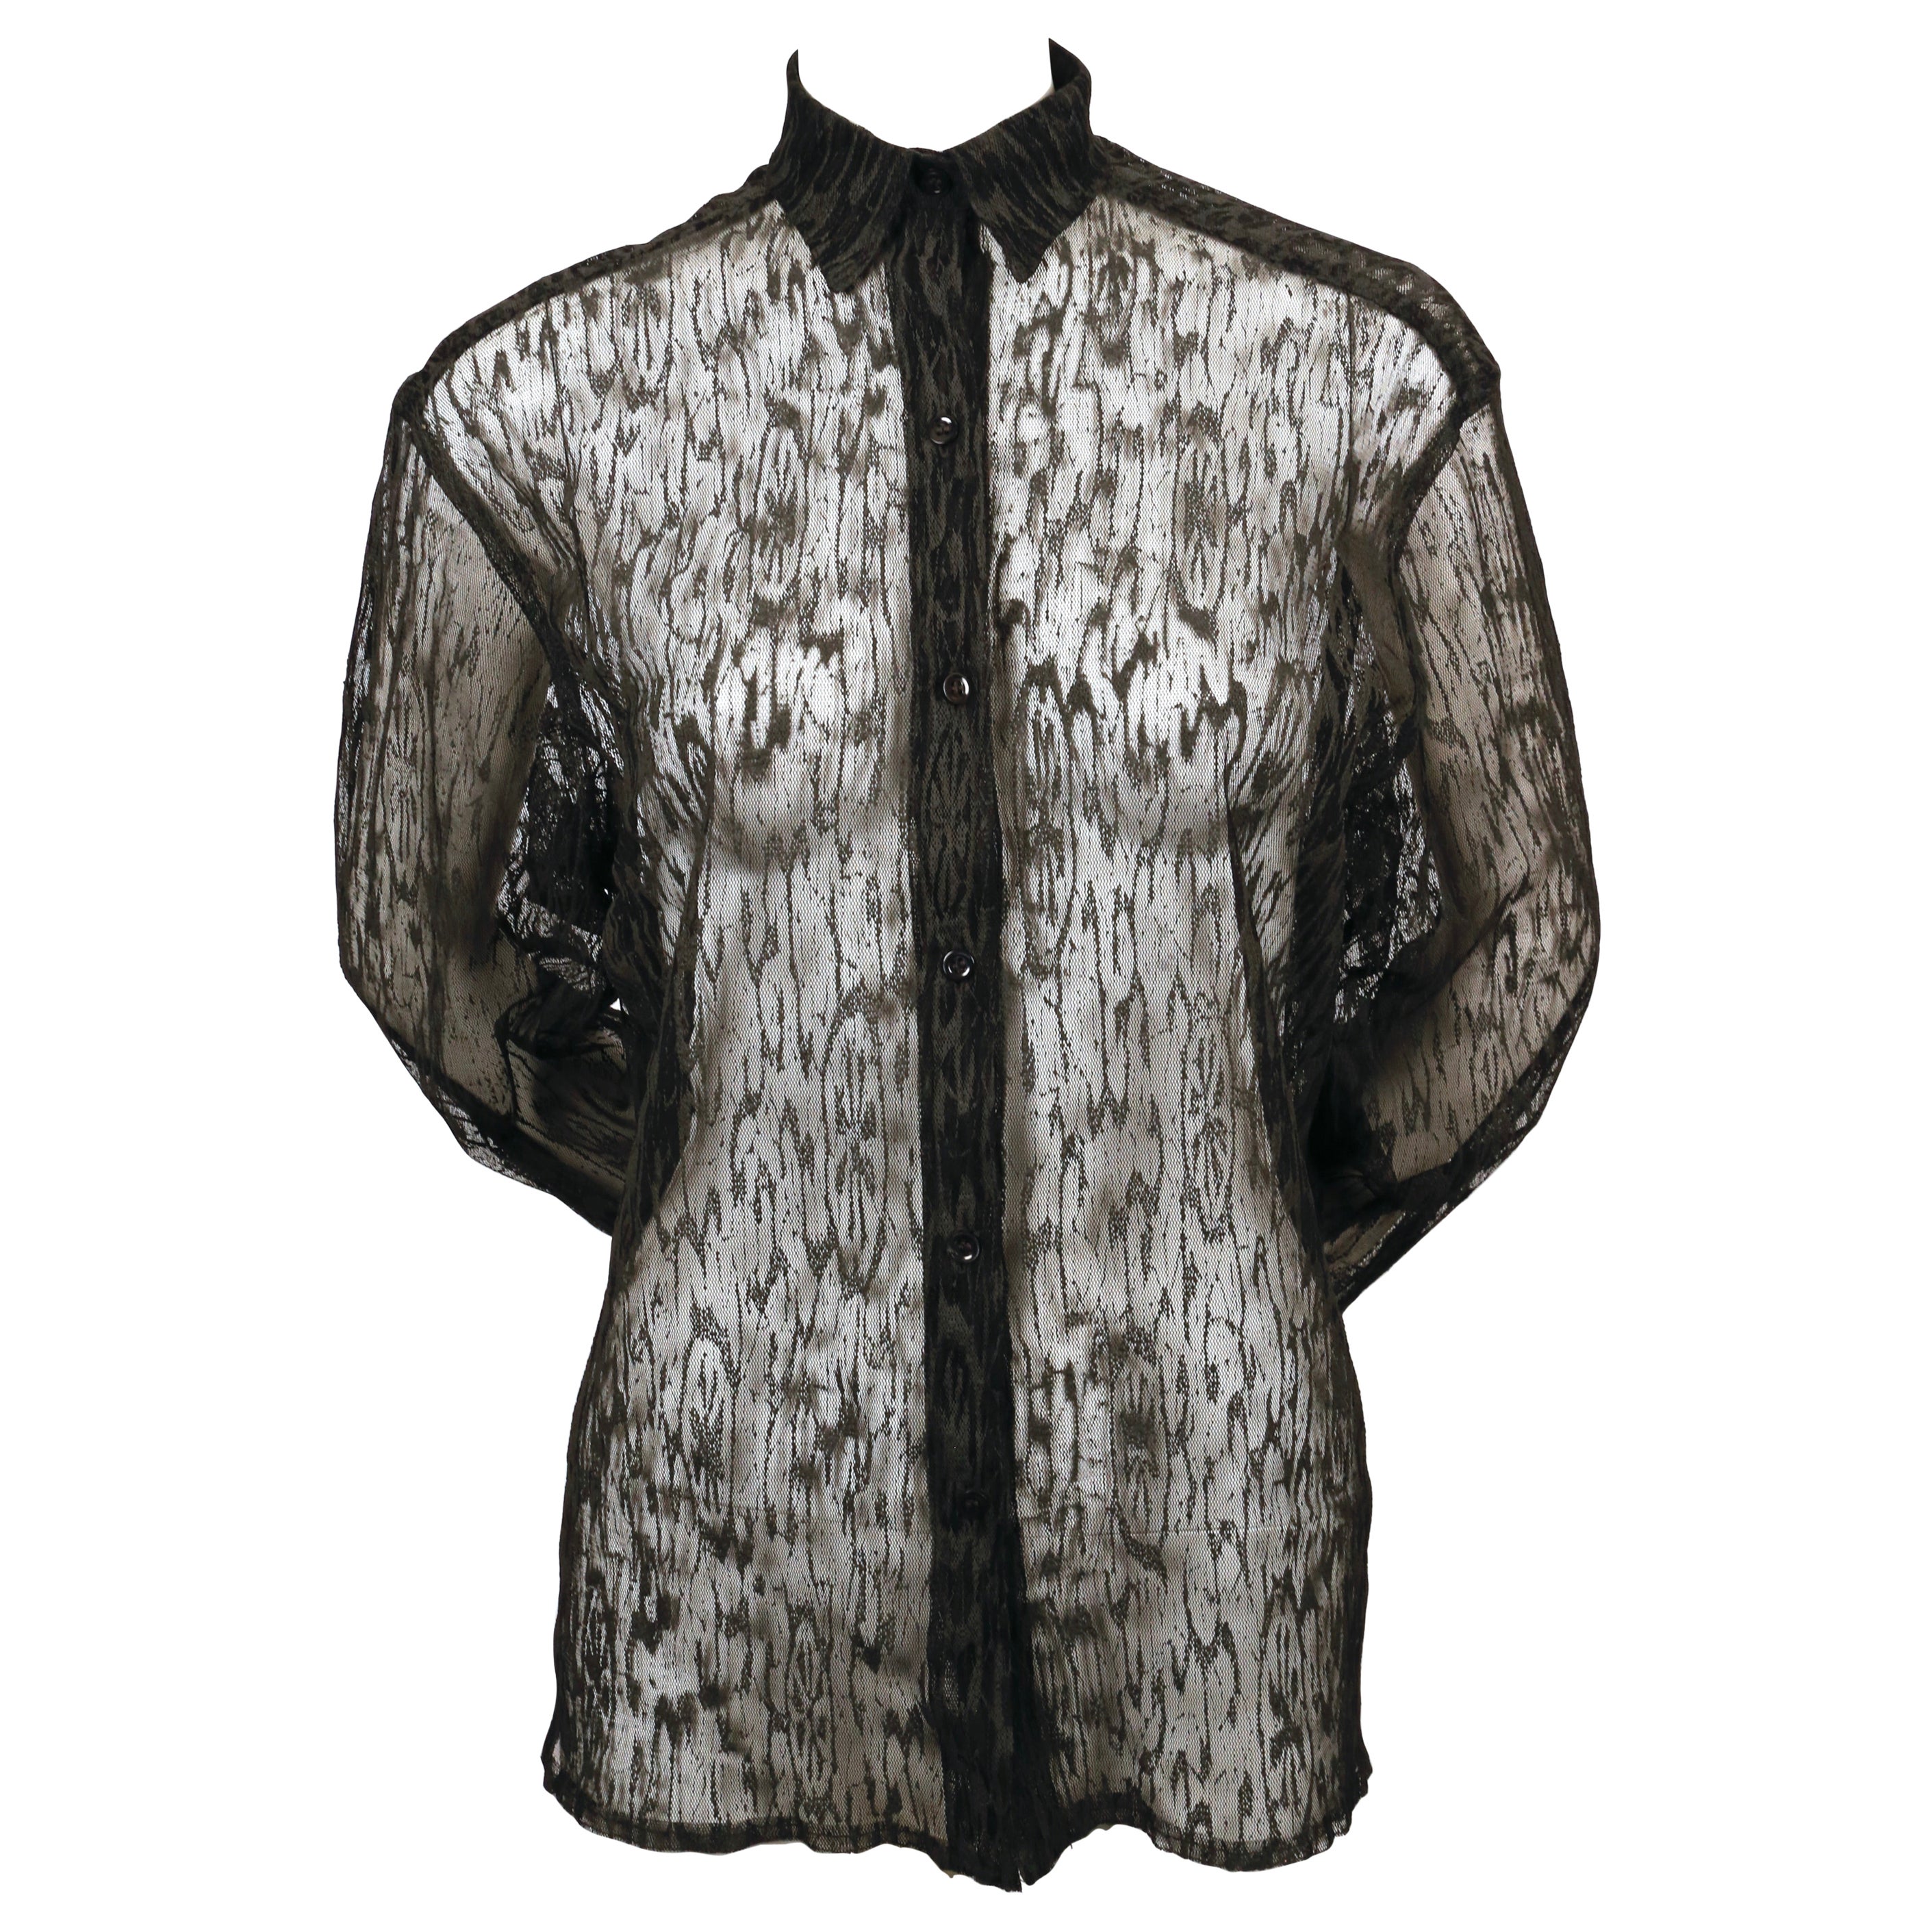 1987 AZZEDINE ALAIA black textured net RUNWAY button up shirt For Sale